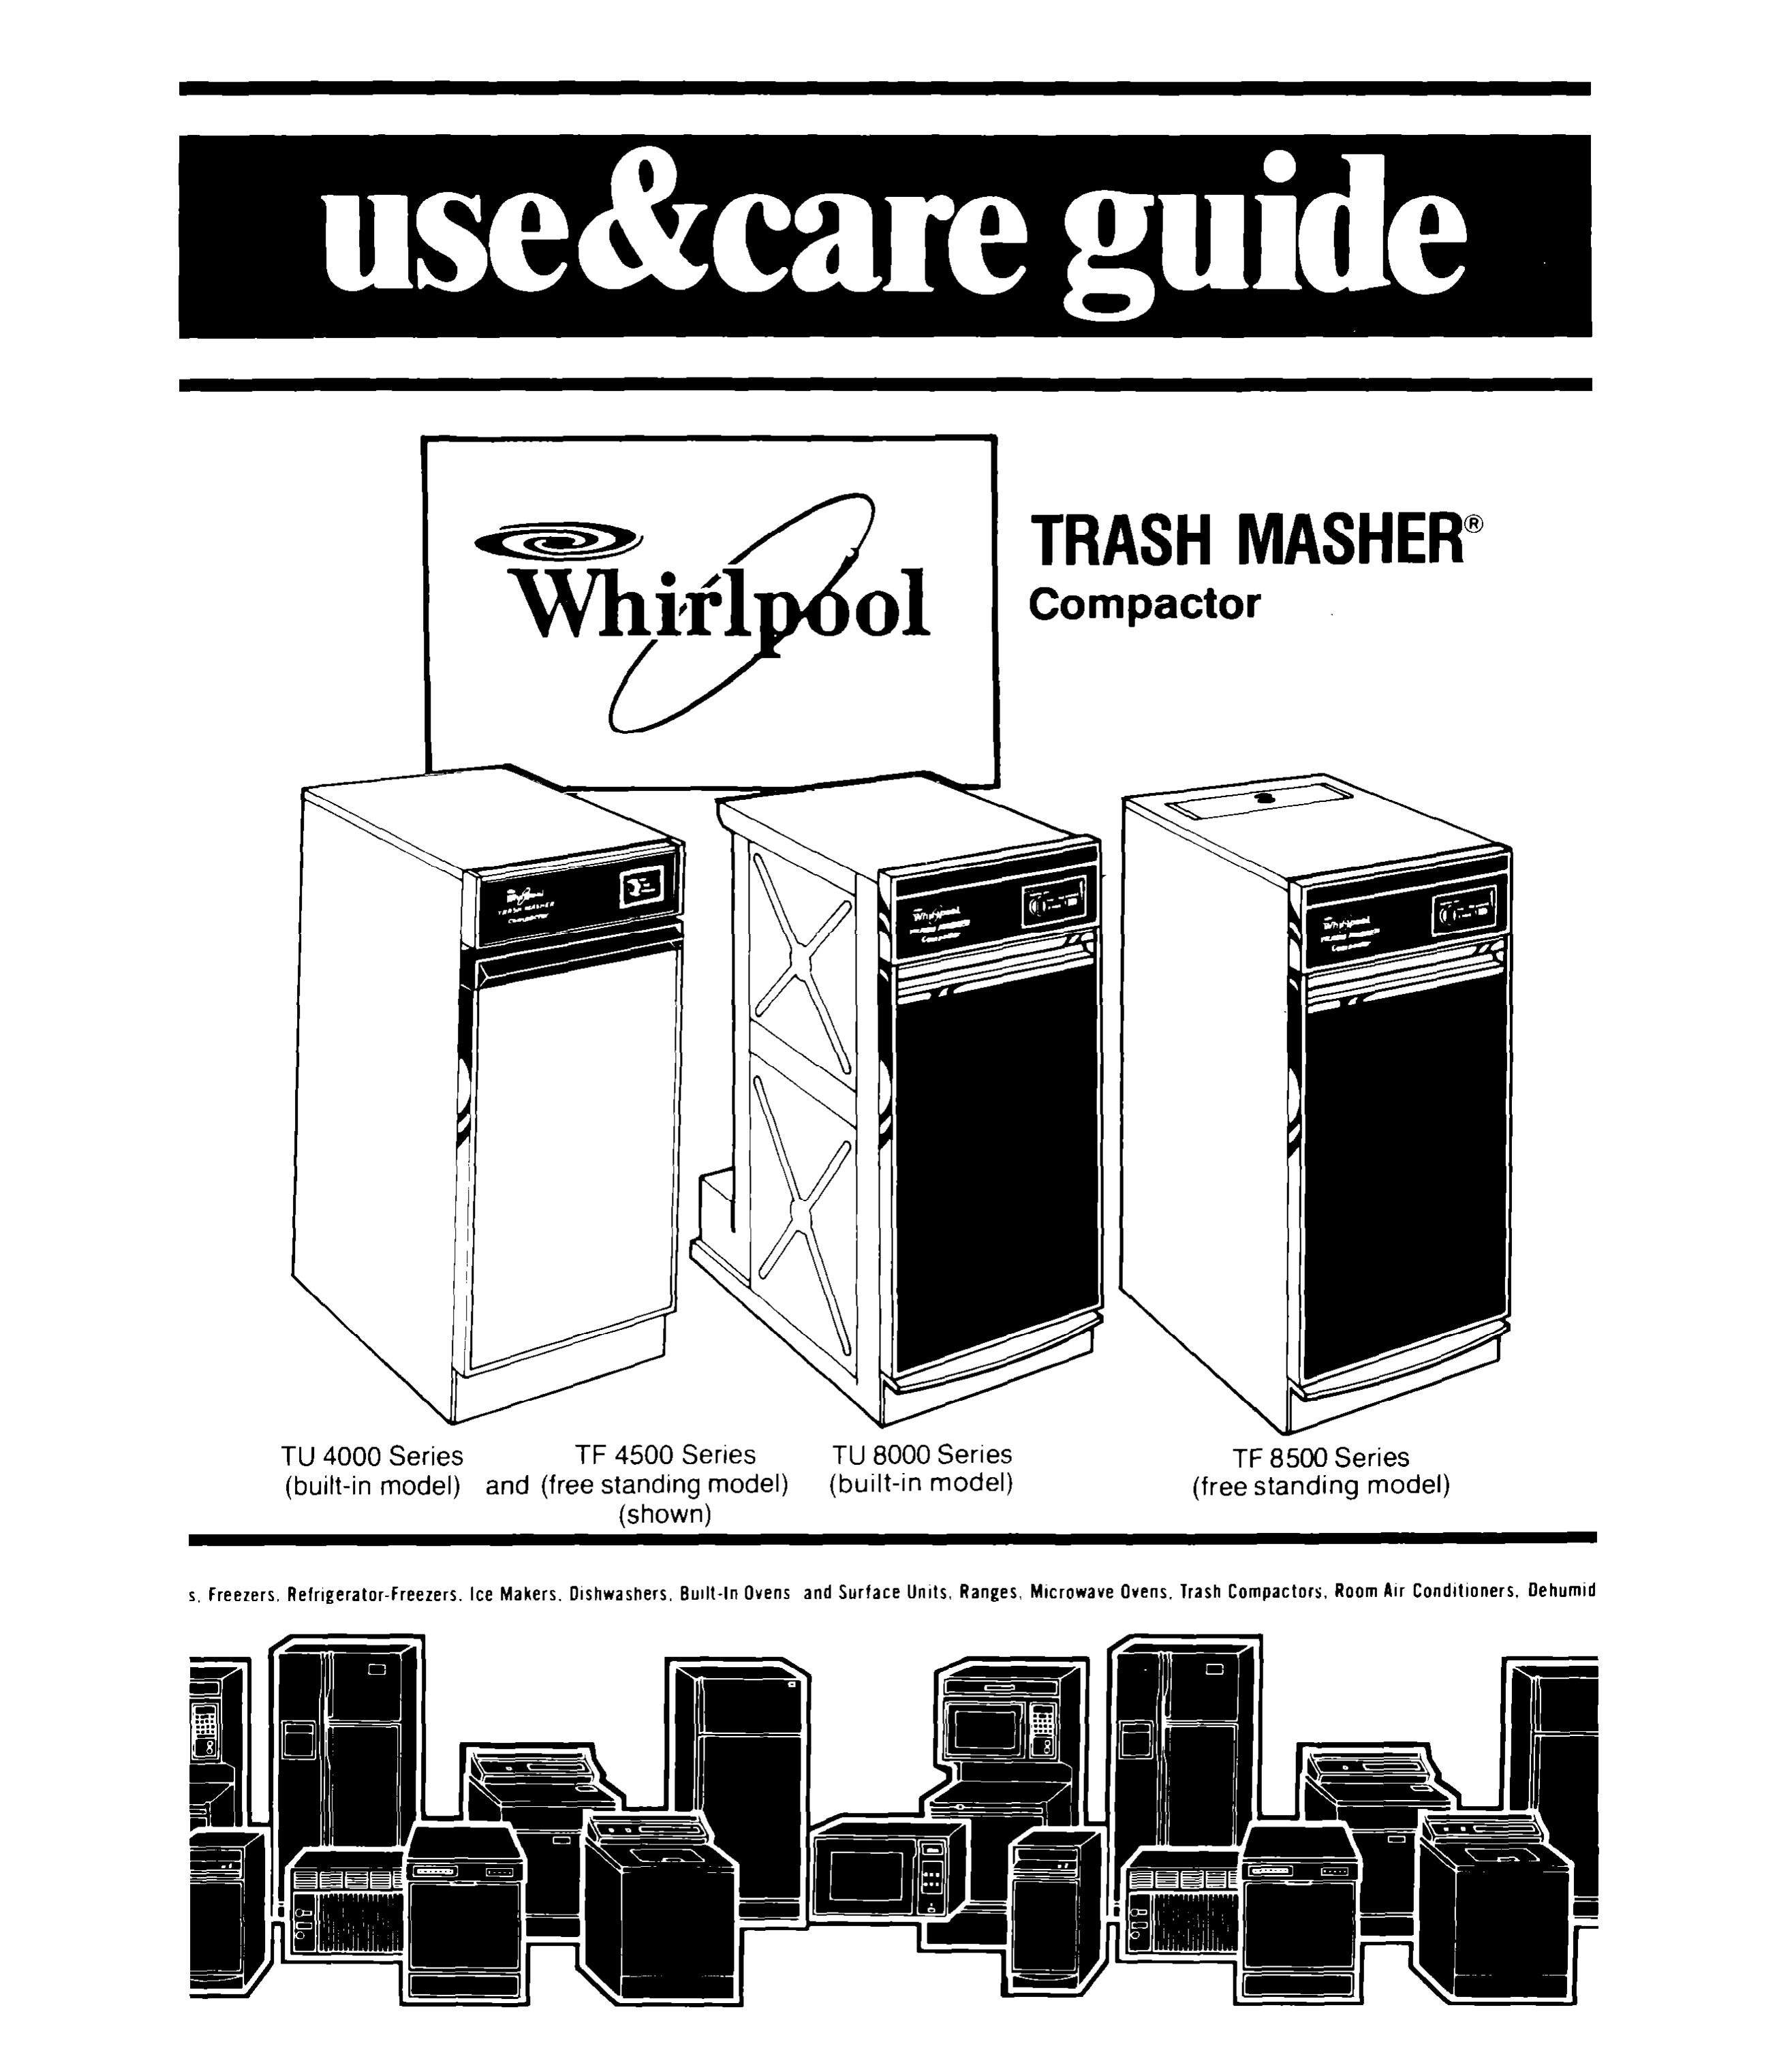 Whirlpool TF 4500 Senes Trash Compactor User Manual